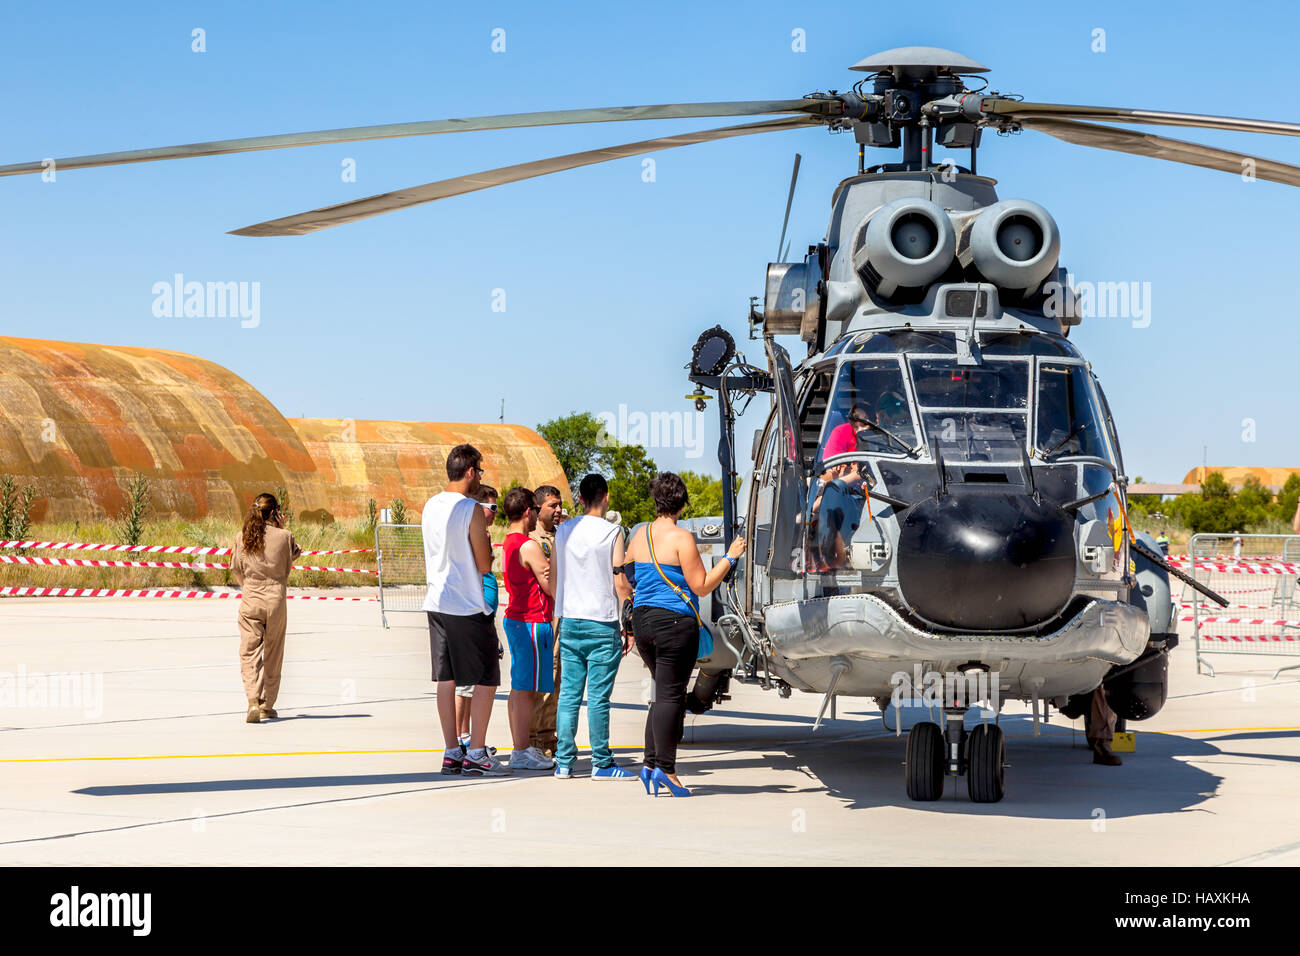 Eurocopter AS332 Super Puma Stock Photo